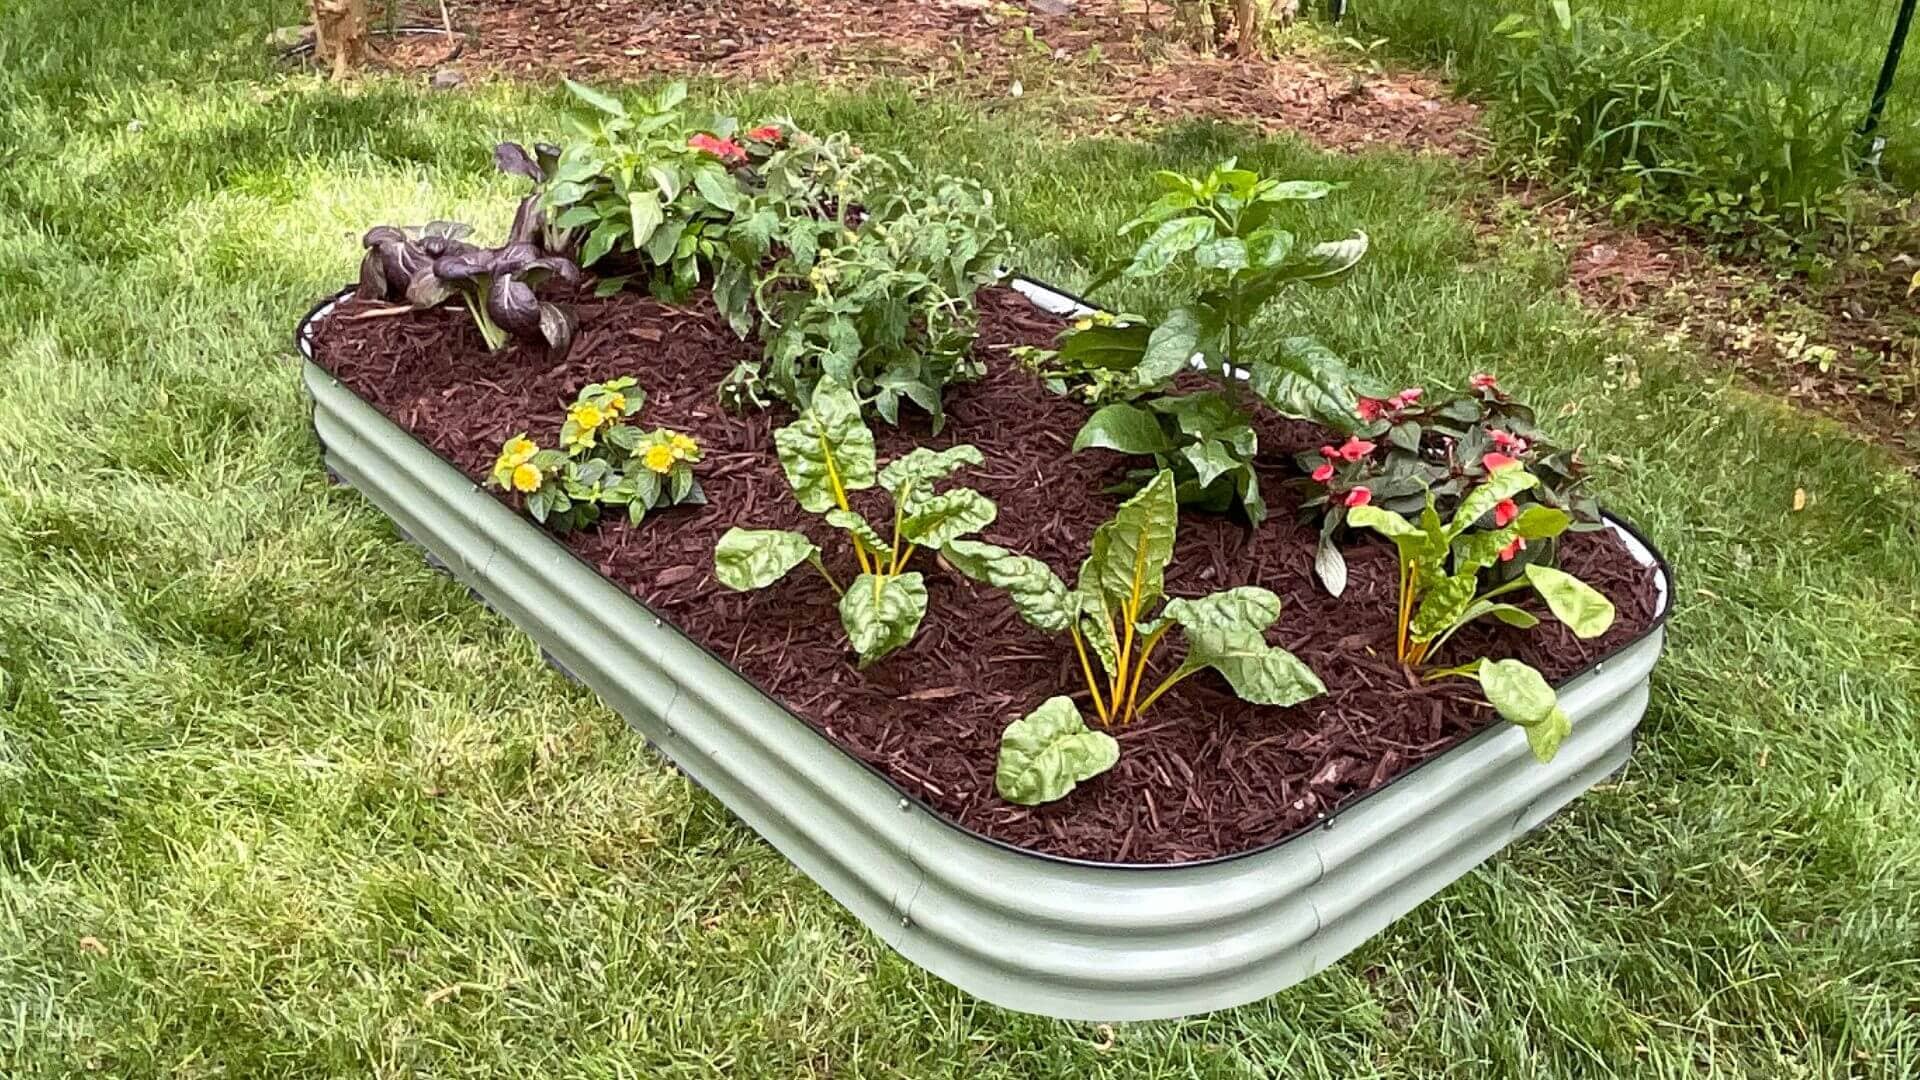 VegHerb's 9-in-1 Metal Raised Garden Bed (8